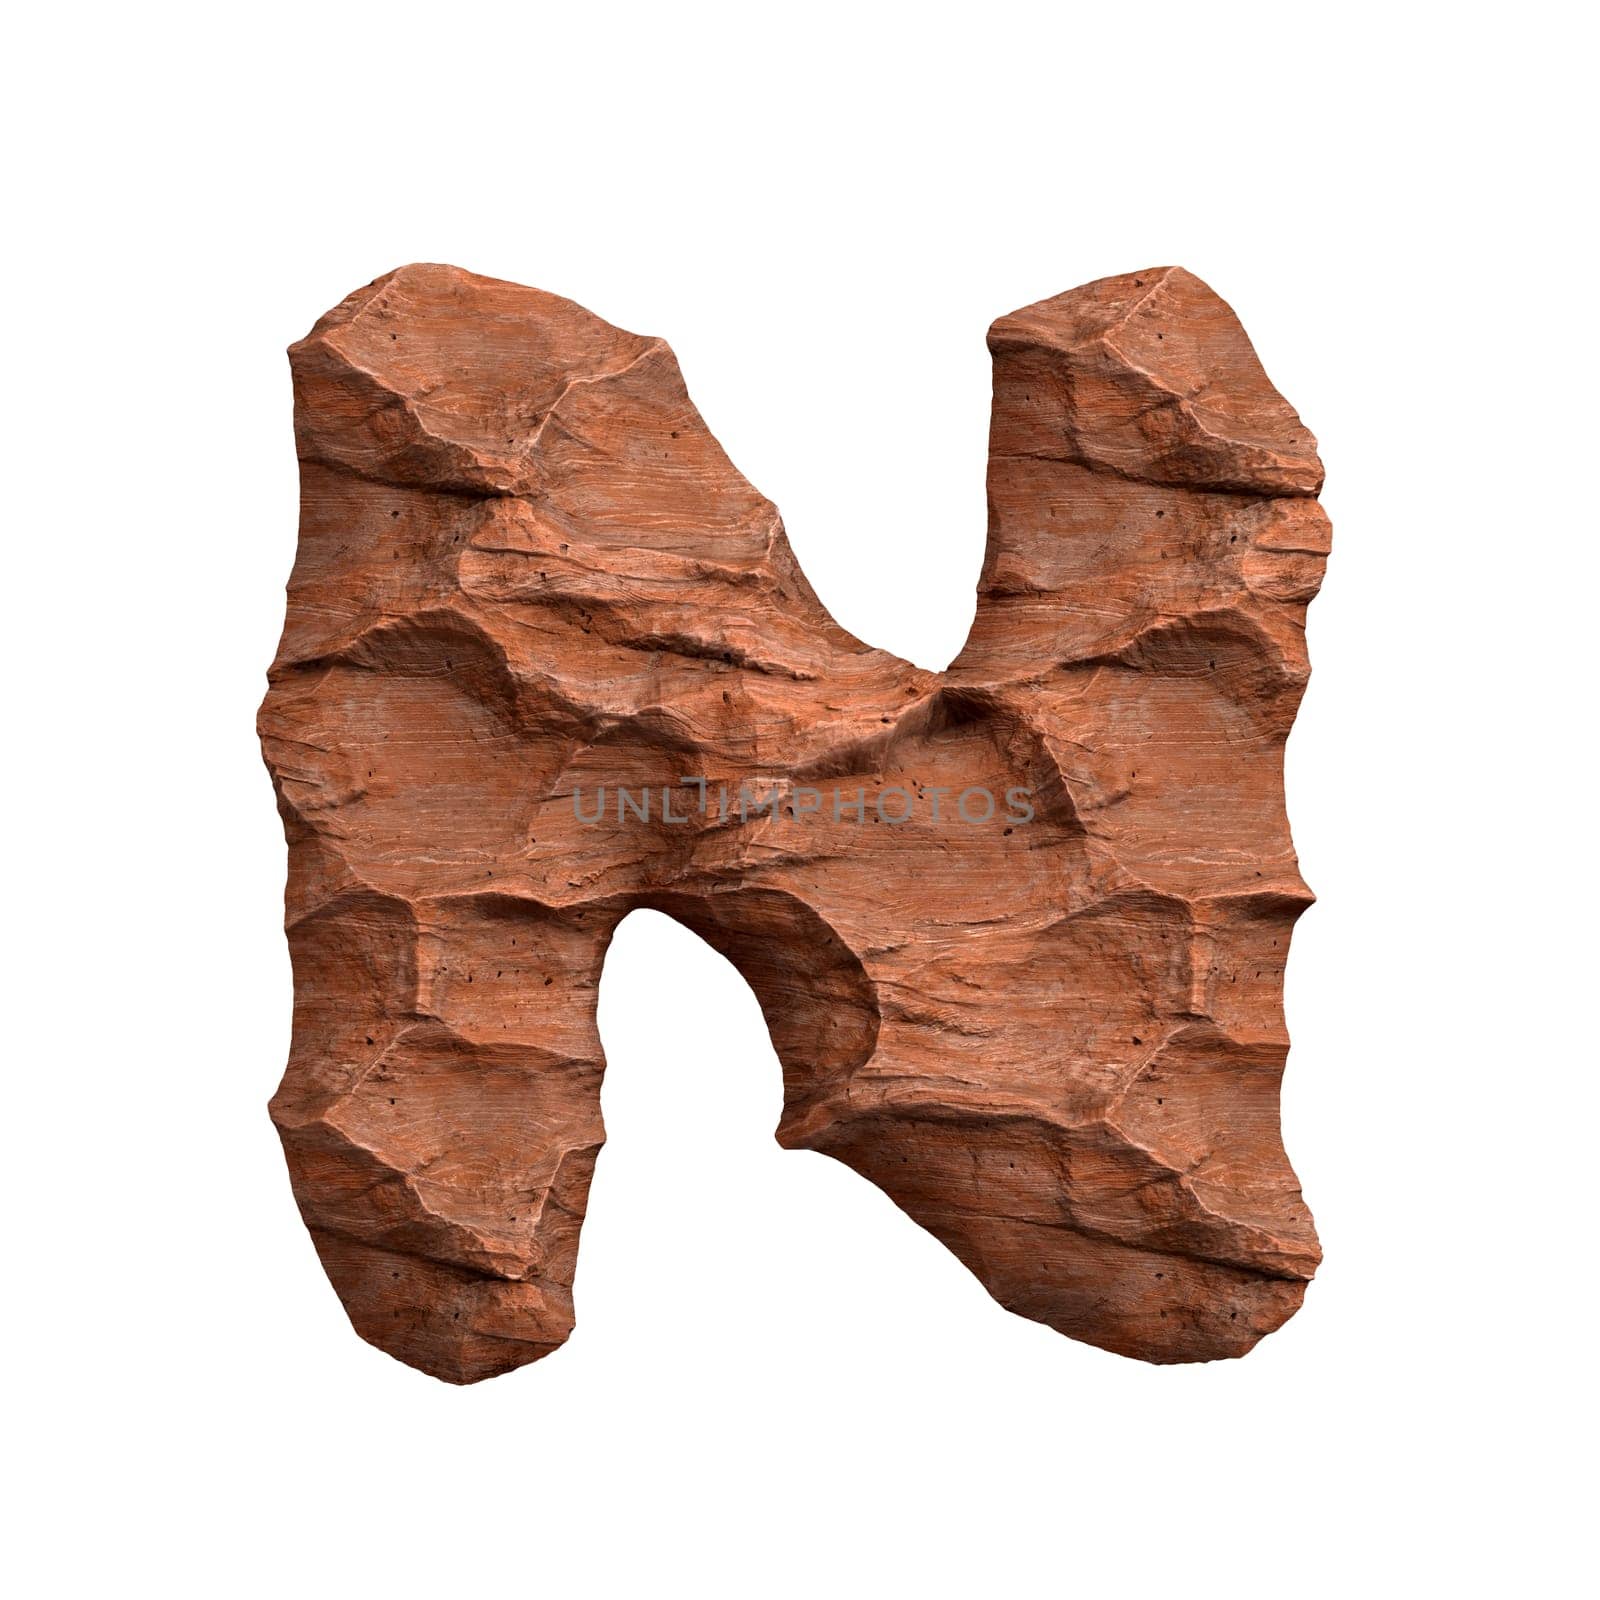 Desert sandstone letter N - Capital 3d red rock font - suitable for Arizona, geology or desert related subjects by chrisroll